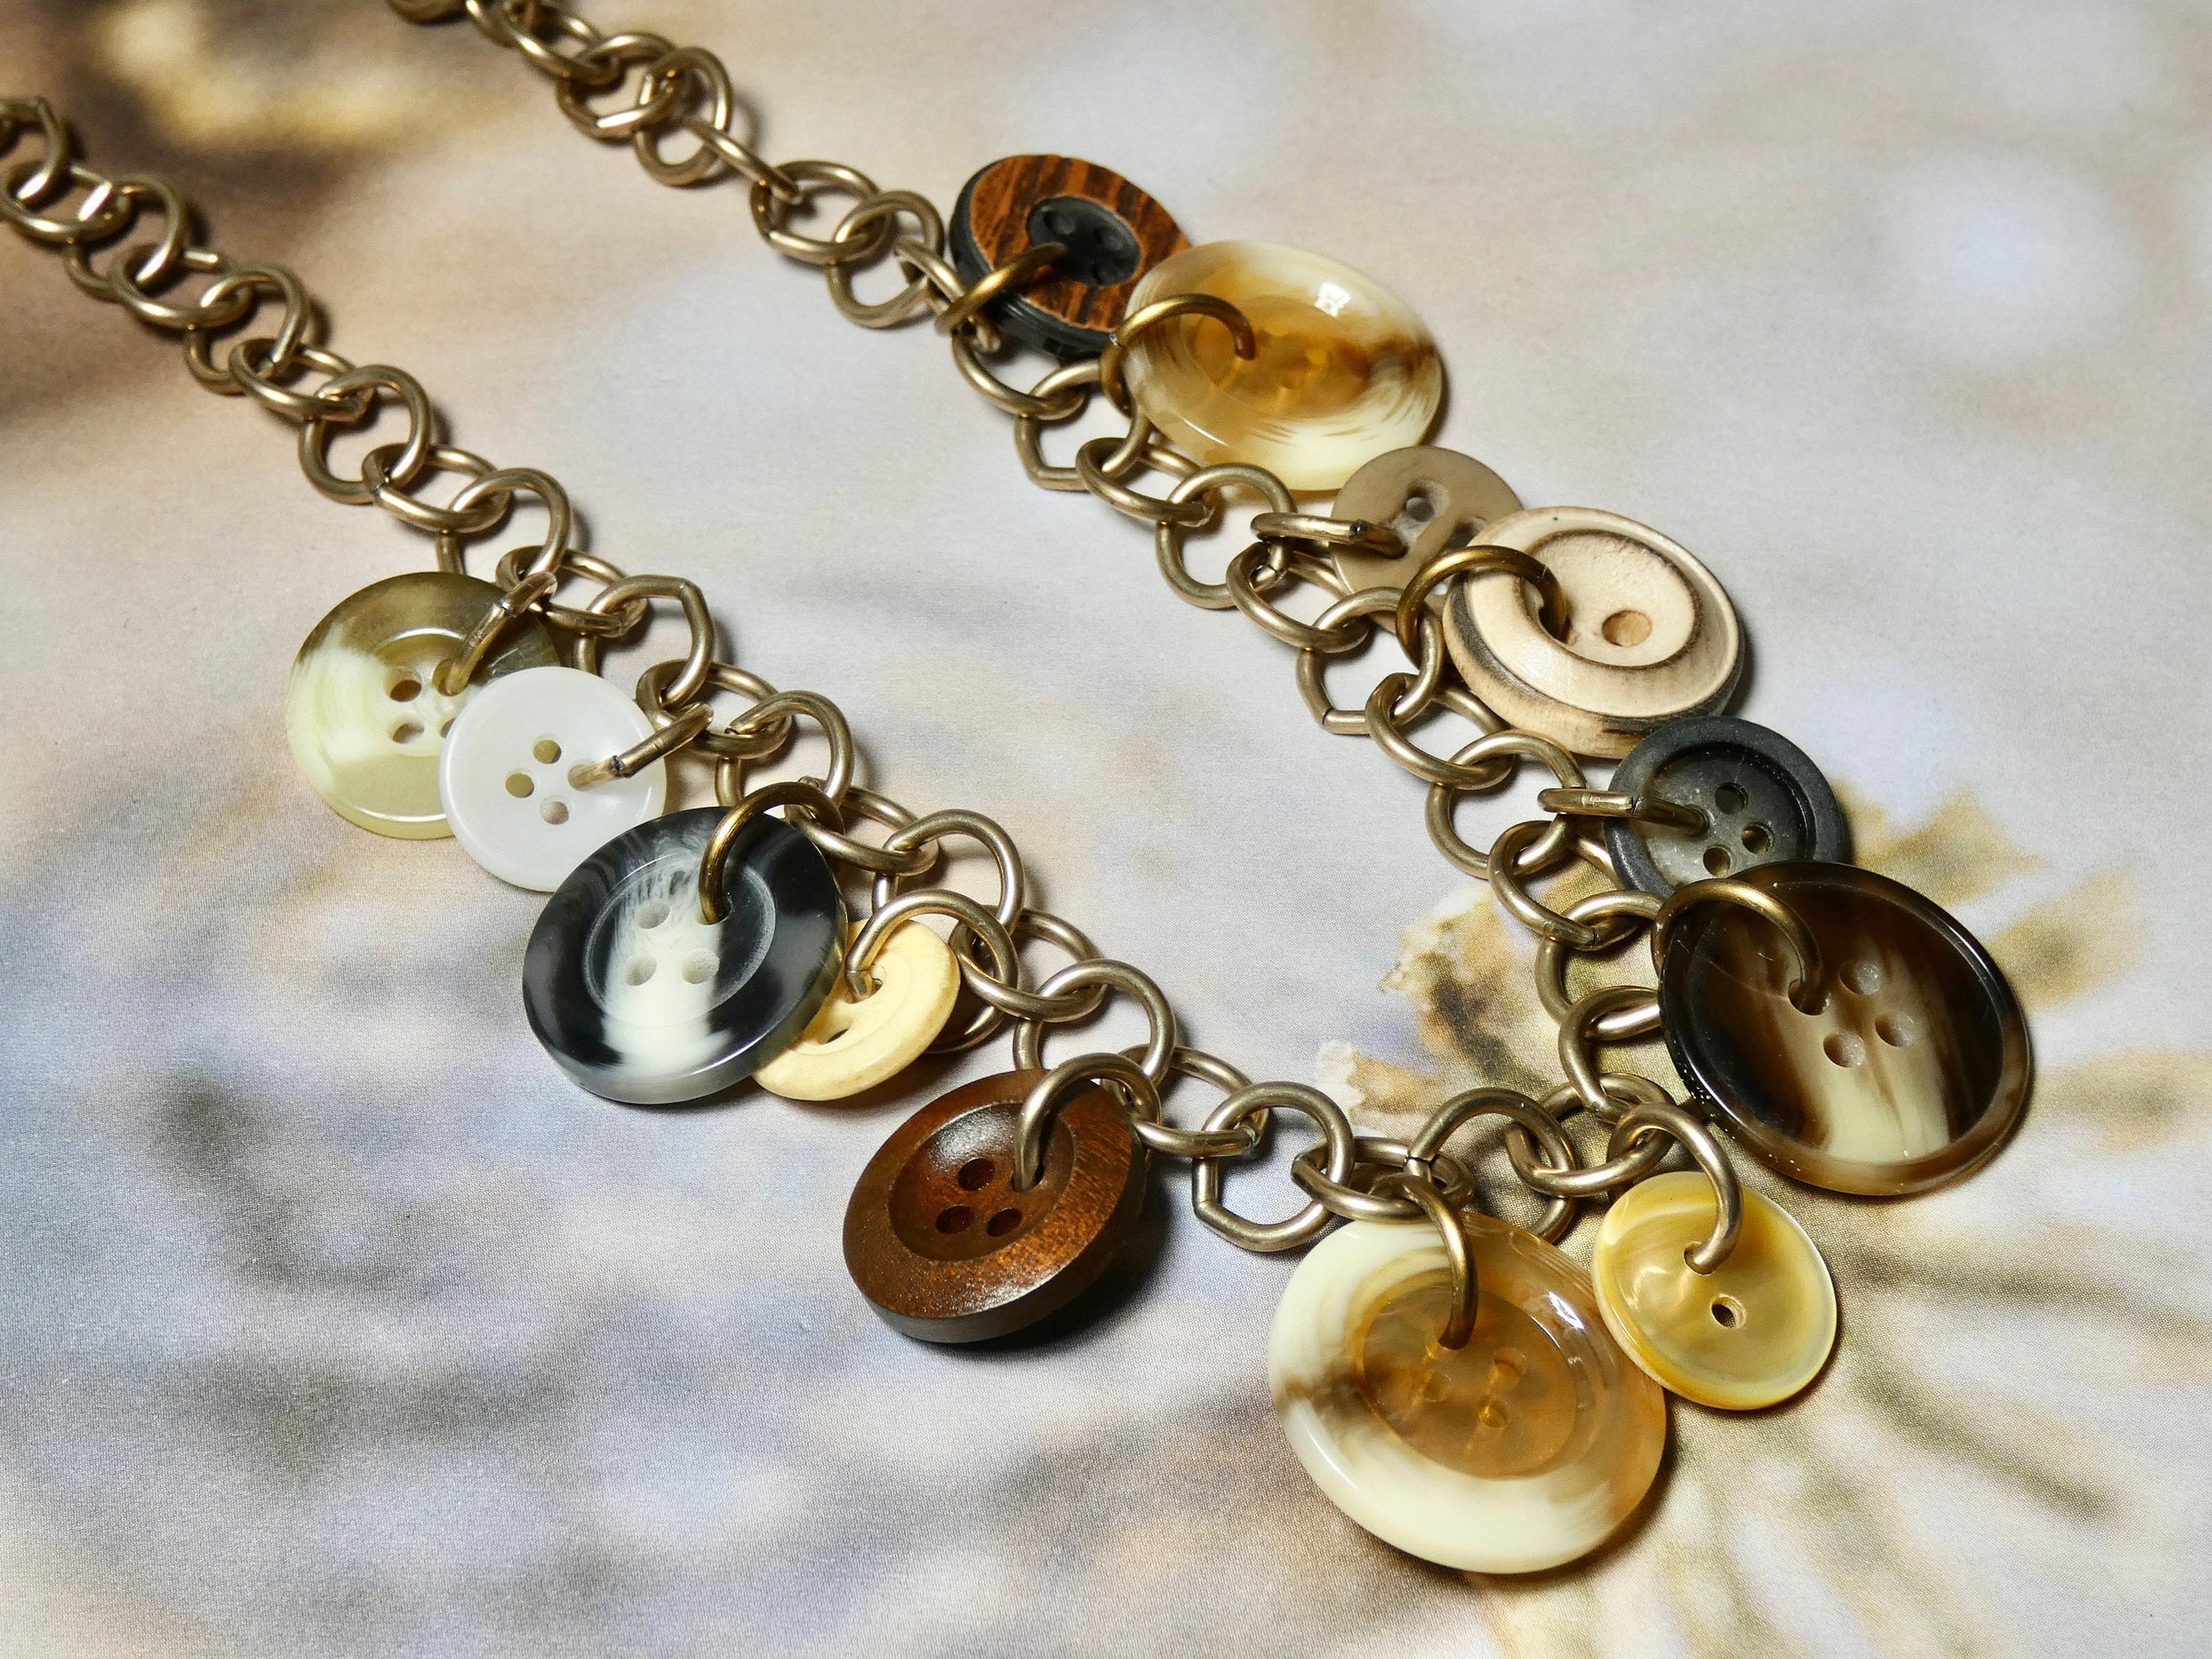 guess gold tone chain charm bracelet B129098-C1GK price in UAE